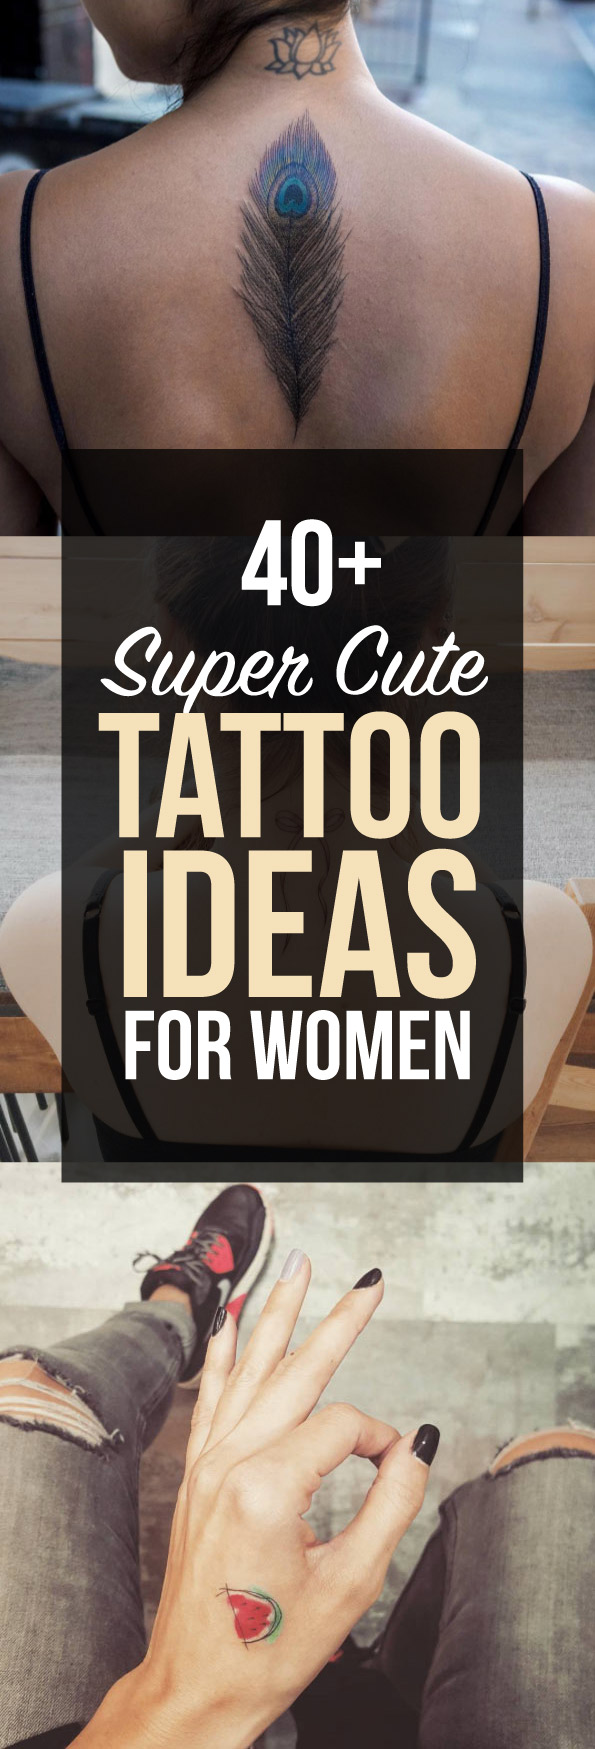 40+ Super Cute Tattoo Ideas for Women